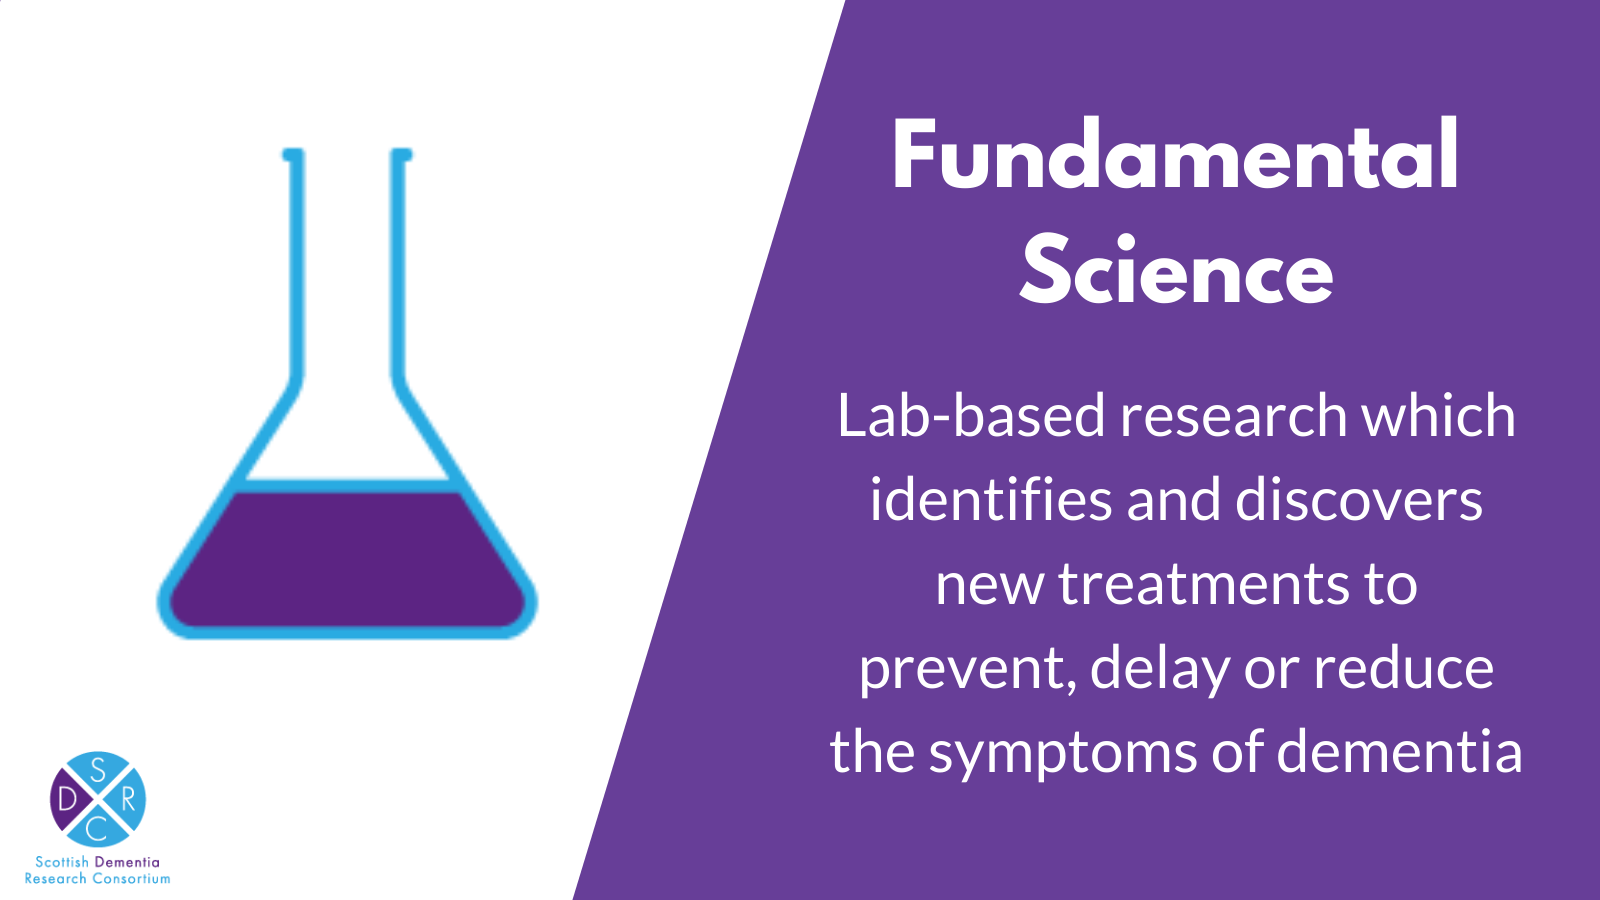 SDRC Annual Report 2021/22: Fundamental Science